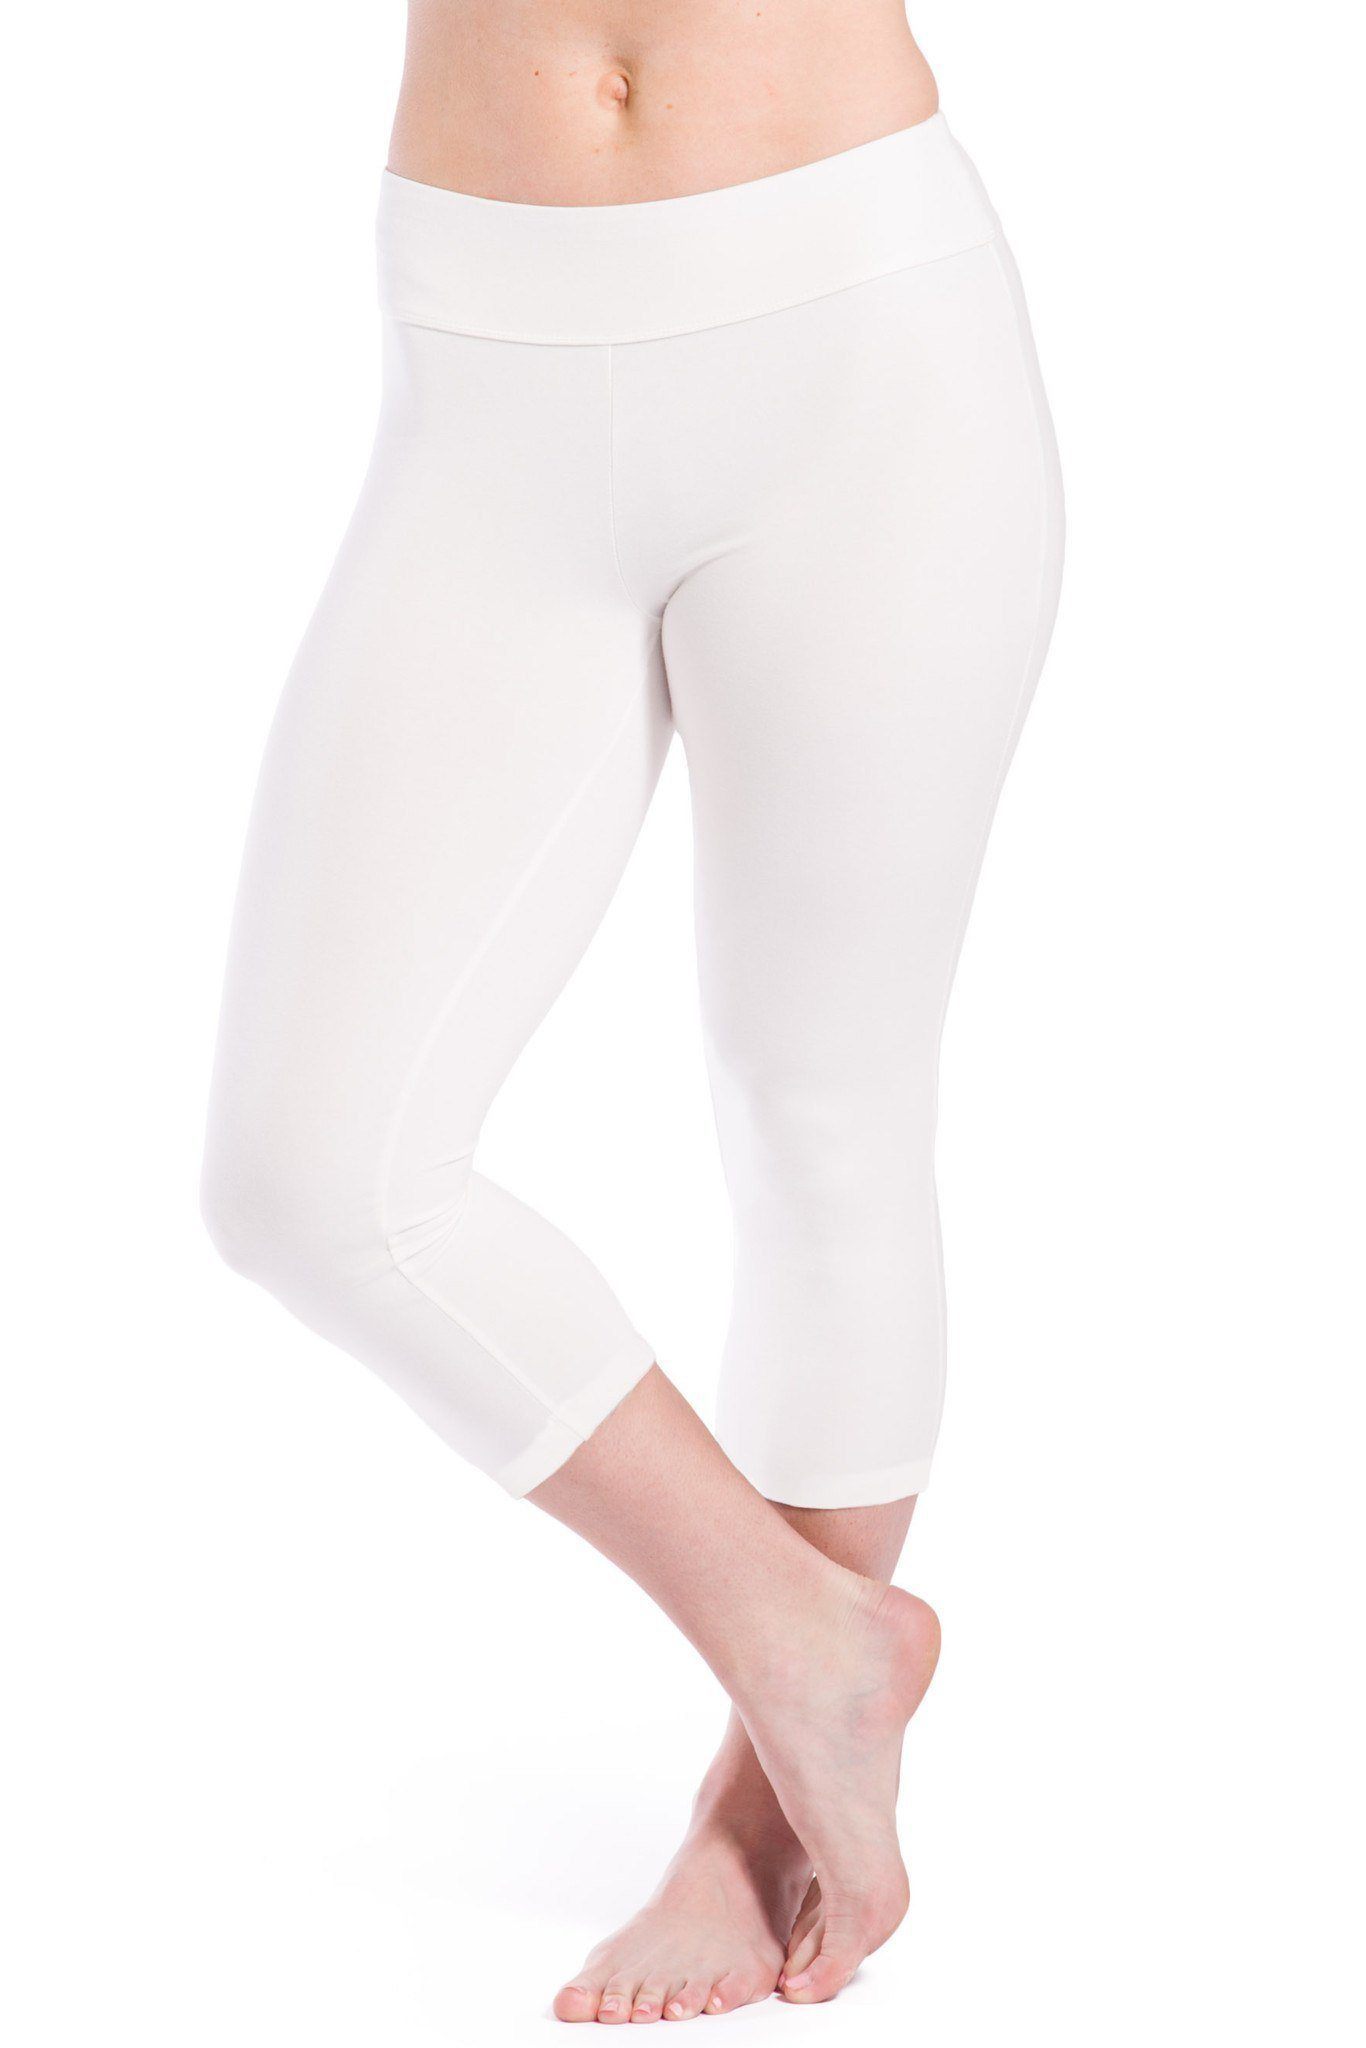 Women's Capri Pants with Pockets Cotton Linen Workout Out Leggings Stretch  Waist Pocket Yoga Gym Cropped Trousers White XXL